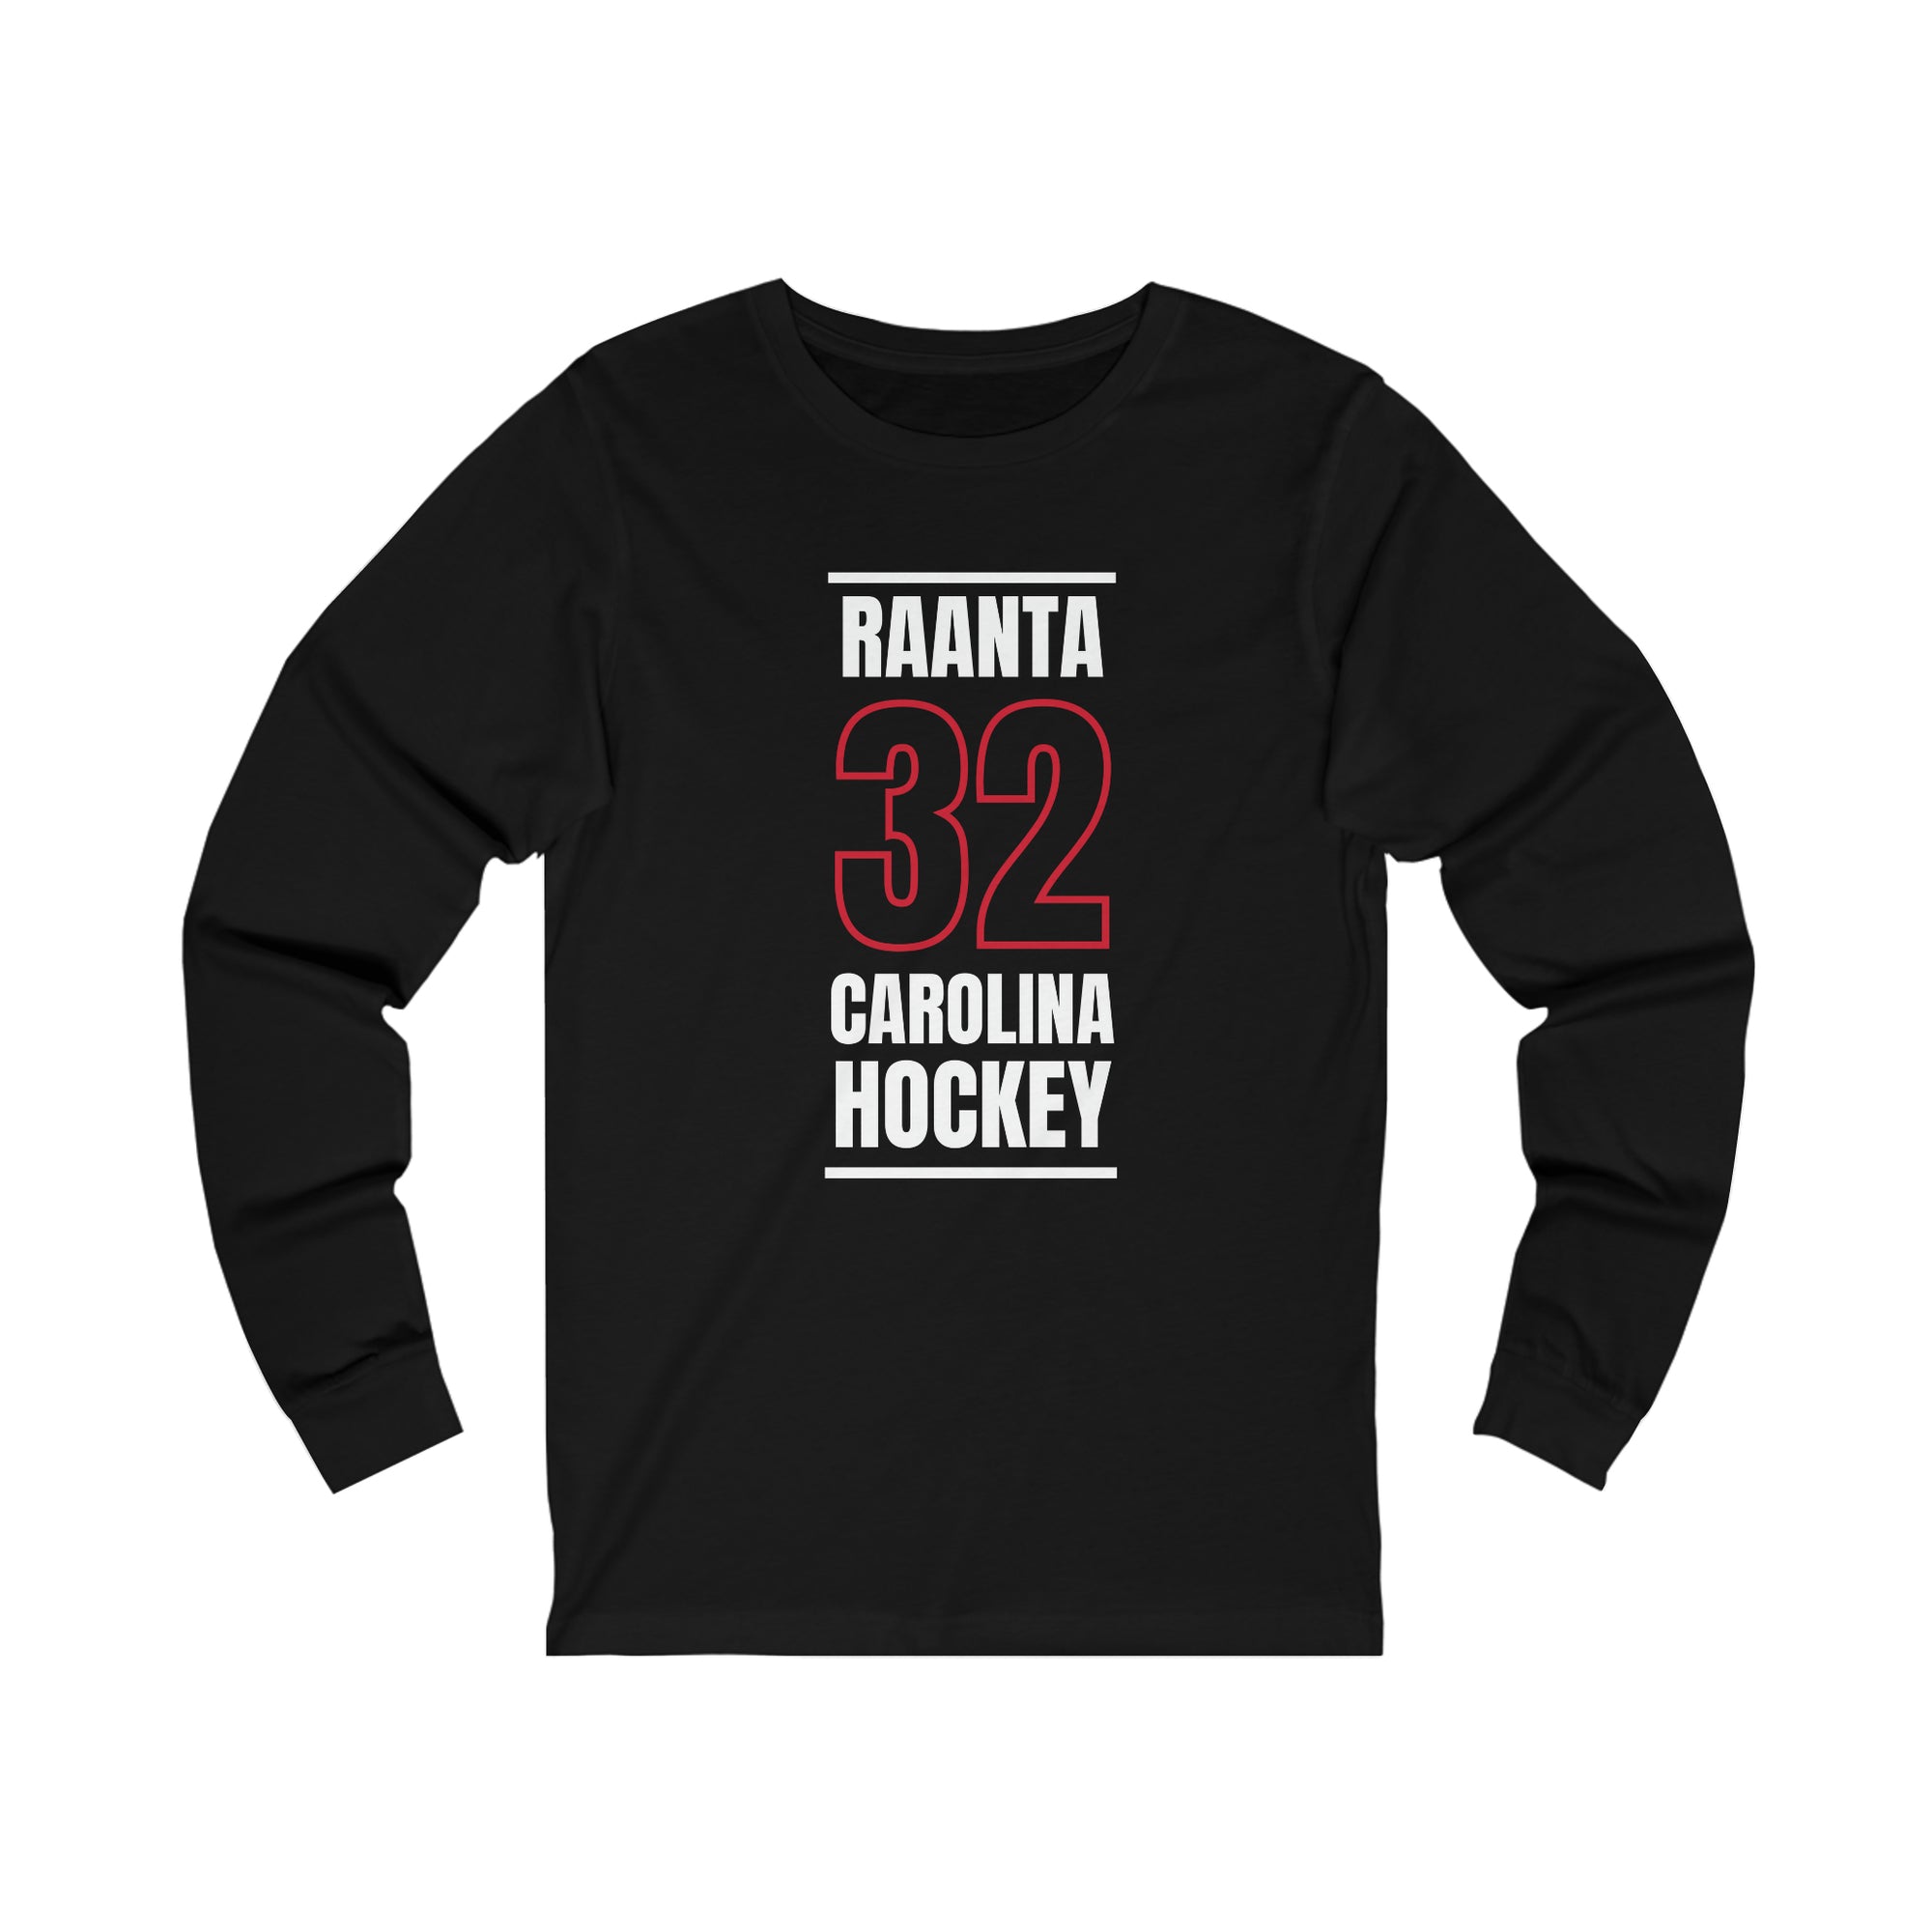 Raanta 32 Carolina Hockey Black Vertical Design Unisex Jersey Long Sleeve Shirt